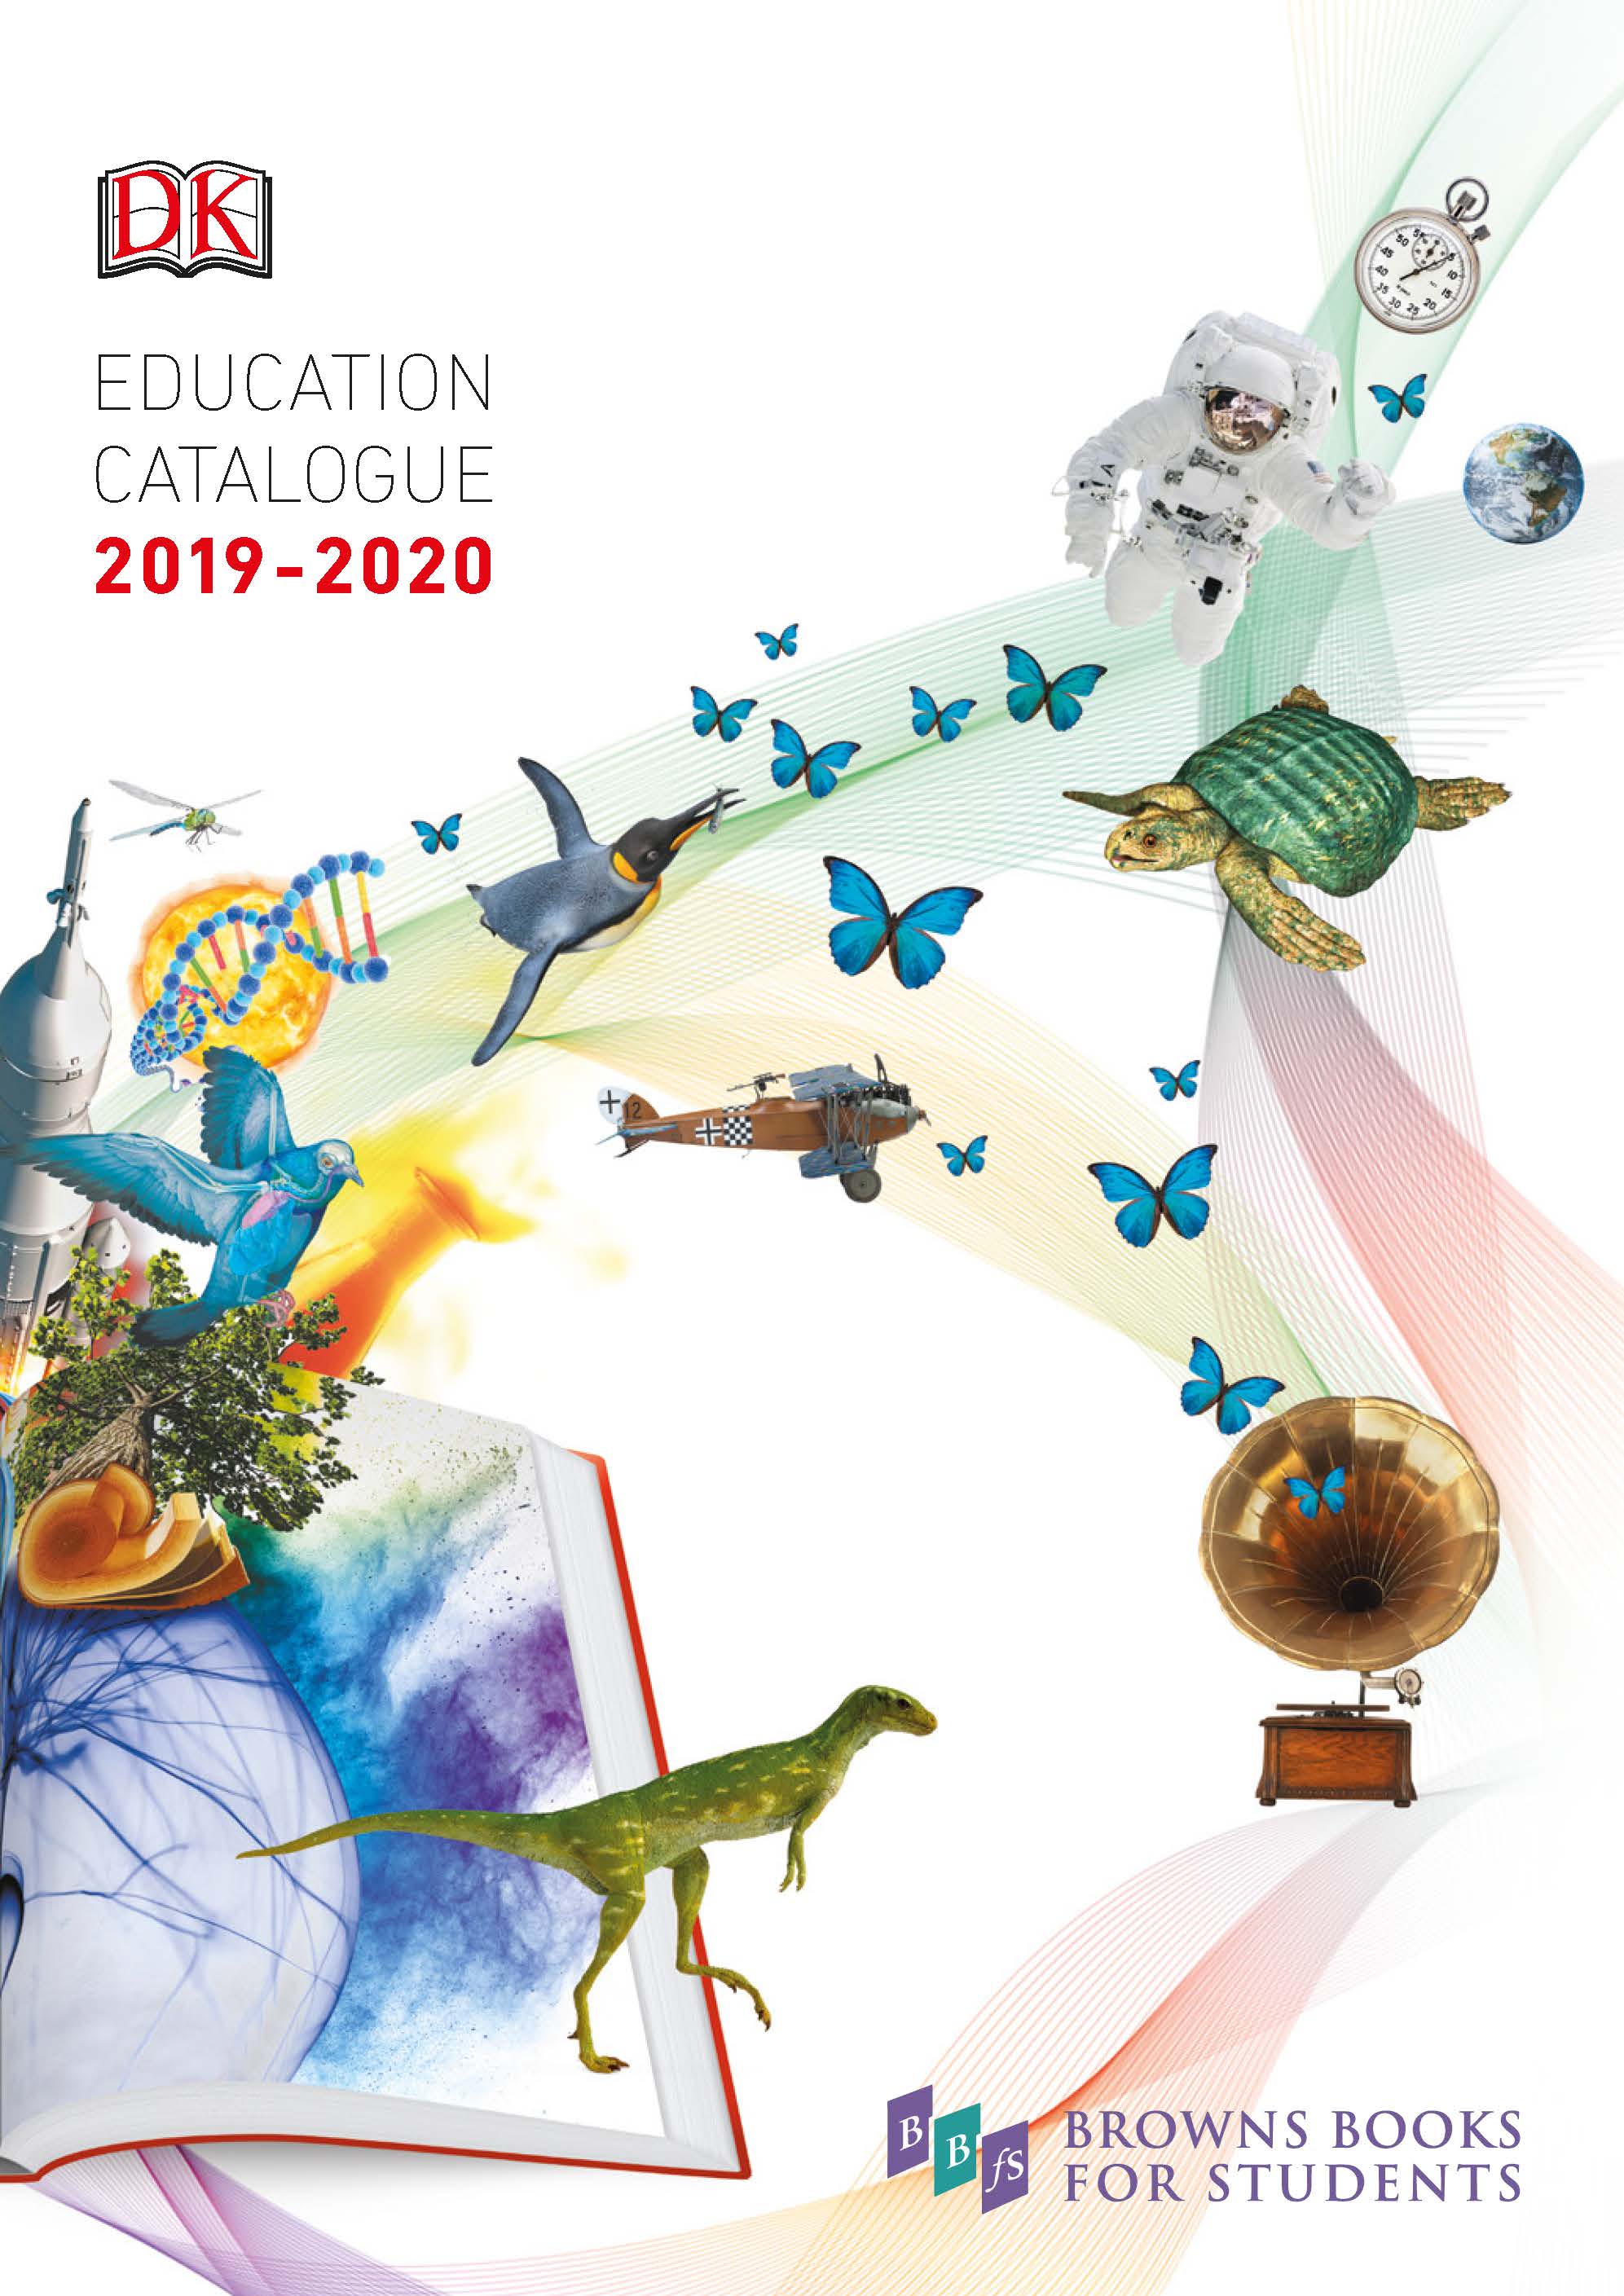 DK Education Catalogue